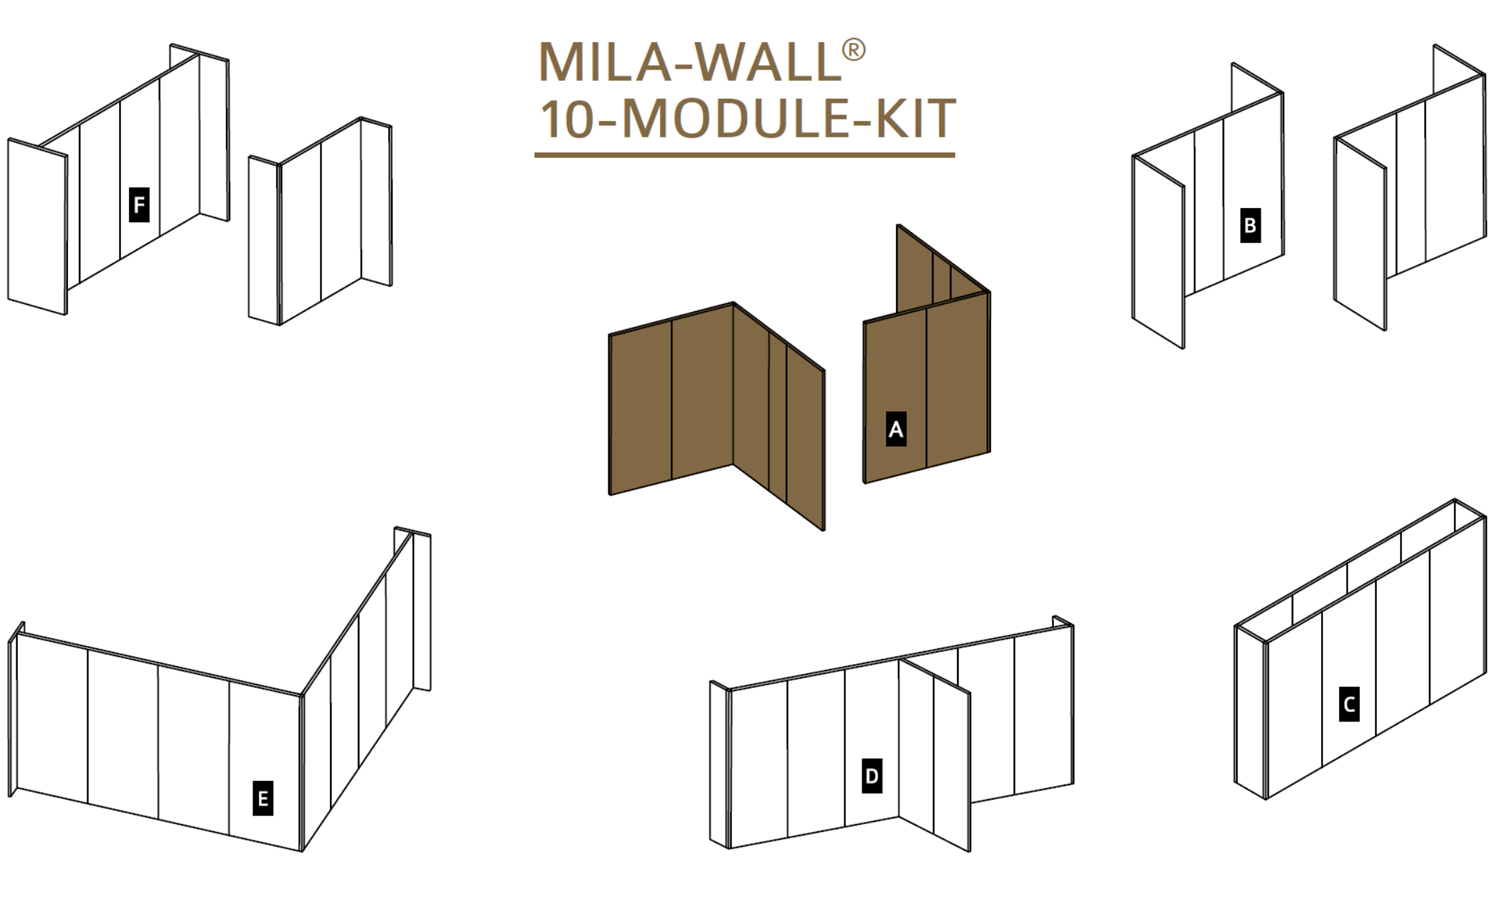 Drawing MBA Mila-wall Kit 10